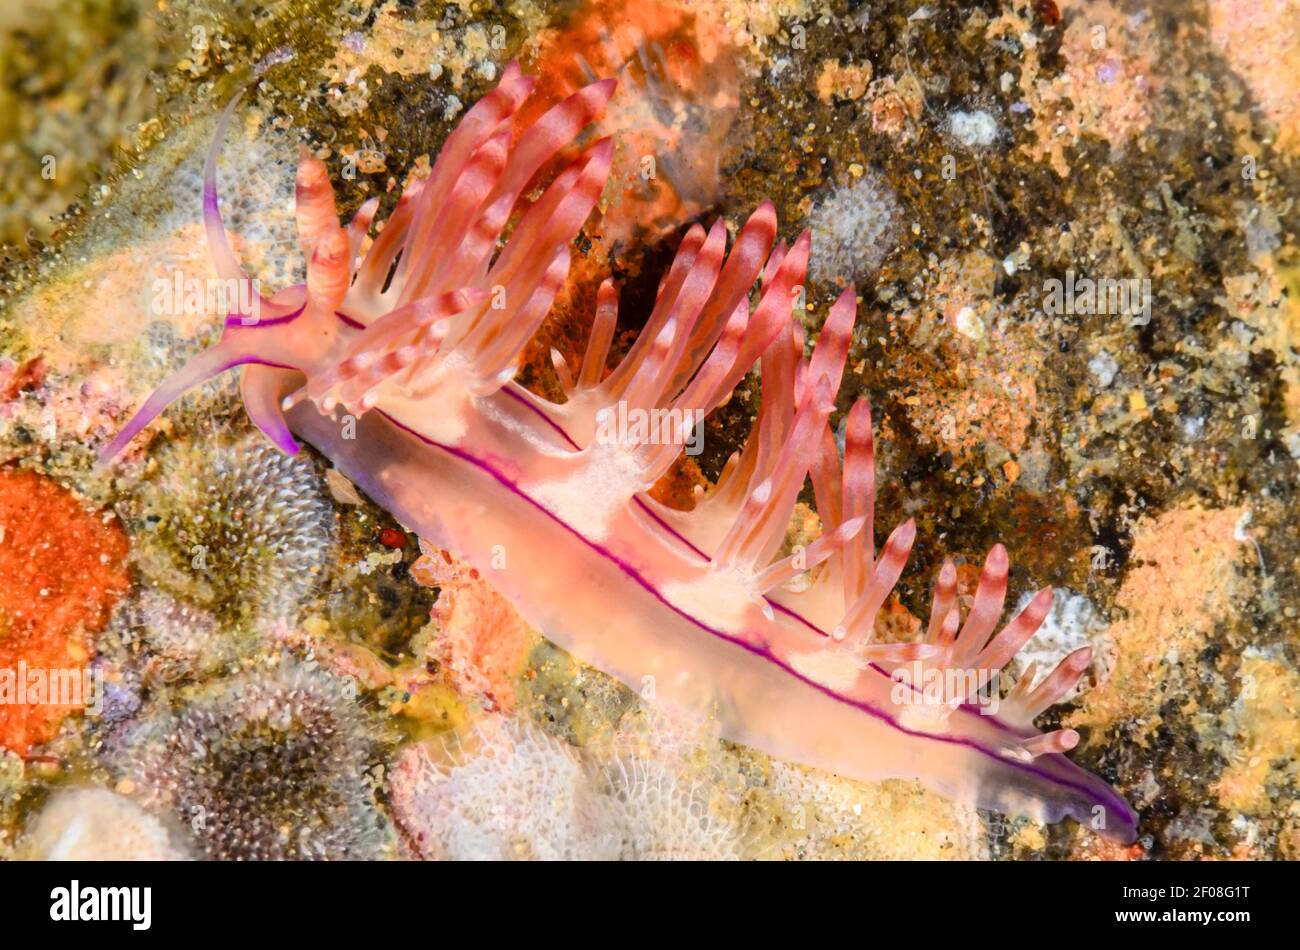 Sea slug or Nudibranch, Coryphellina flamma, Anilao, Batangas, Philippines, Pacific Stock Photo